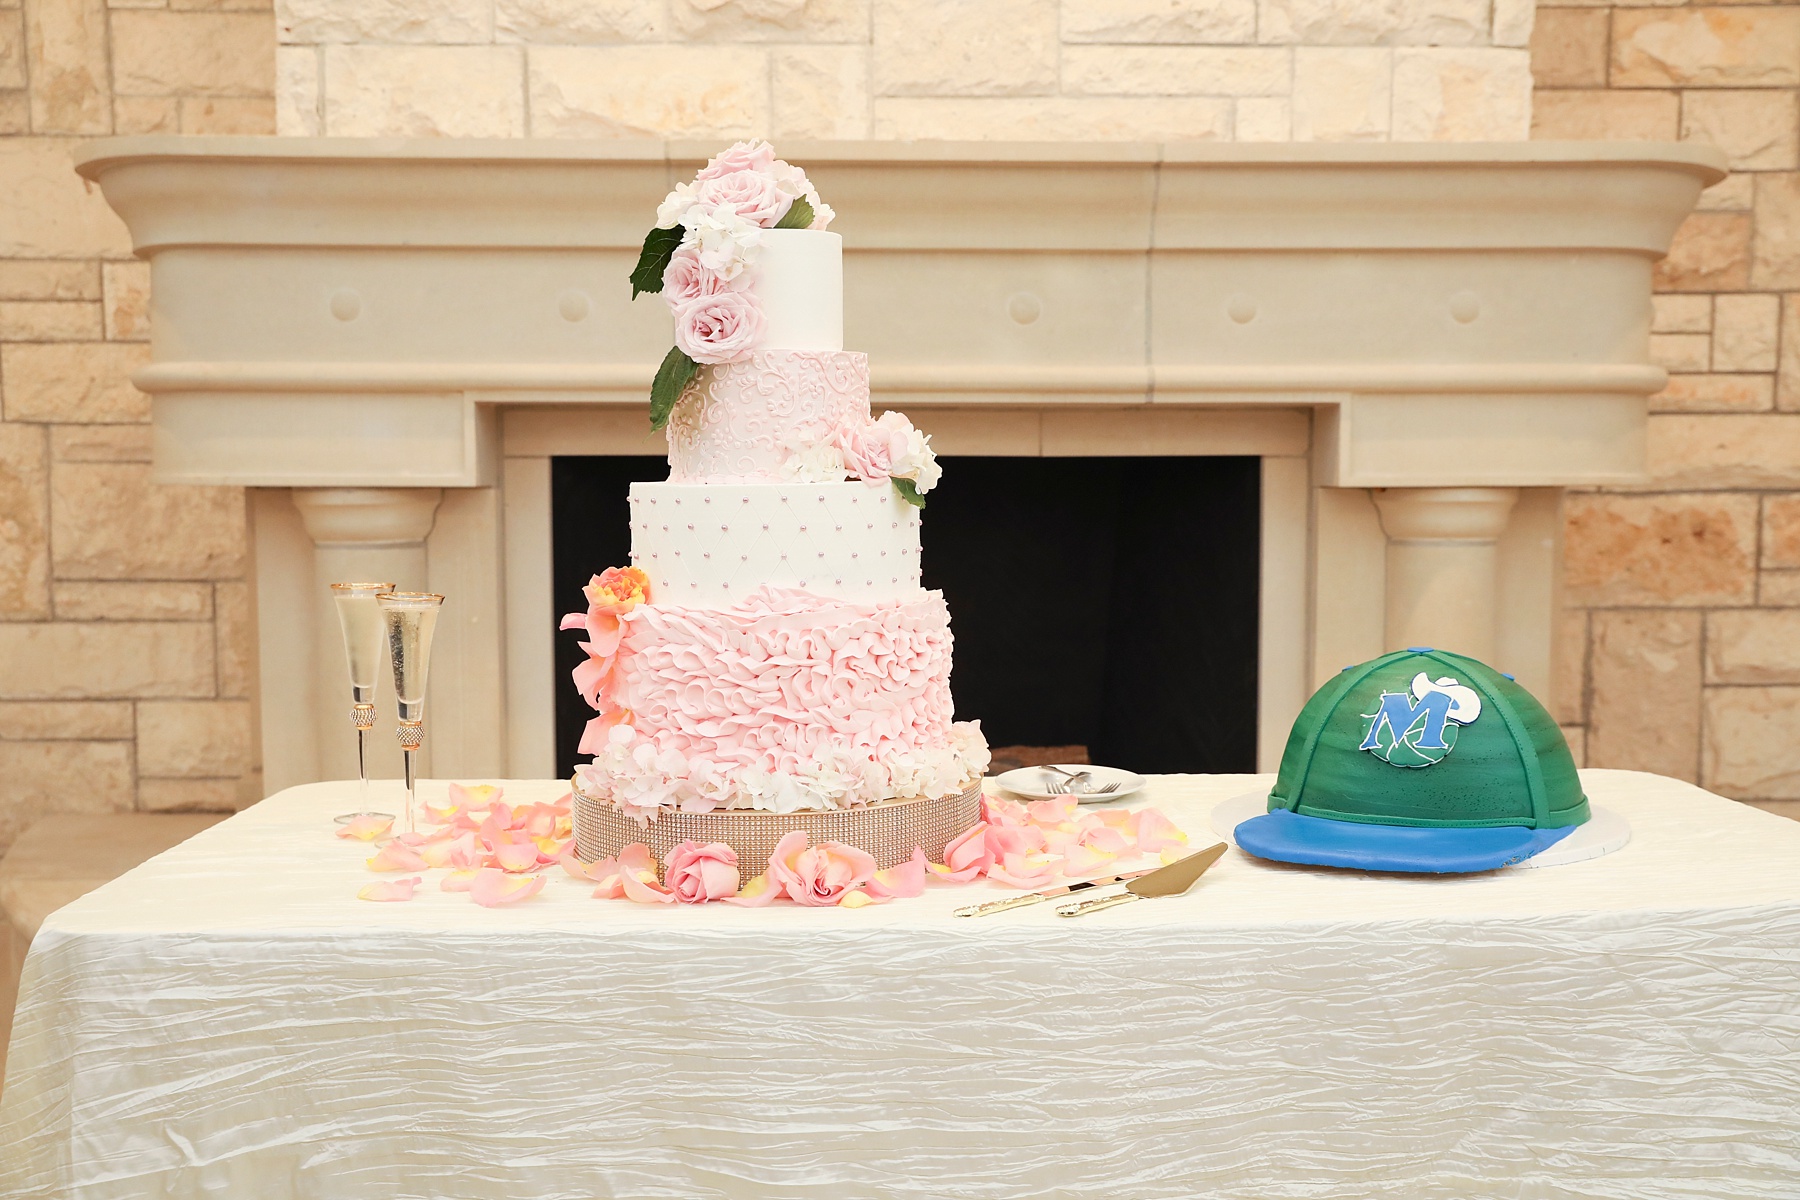 Randi Michelle Weddings photographs pink and white wedding cake